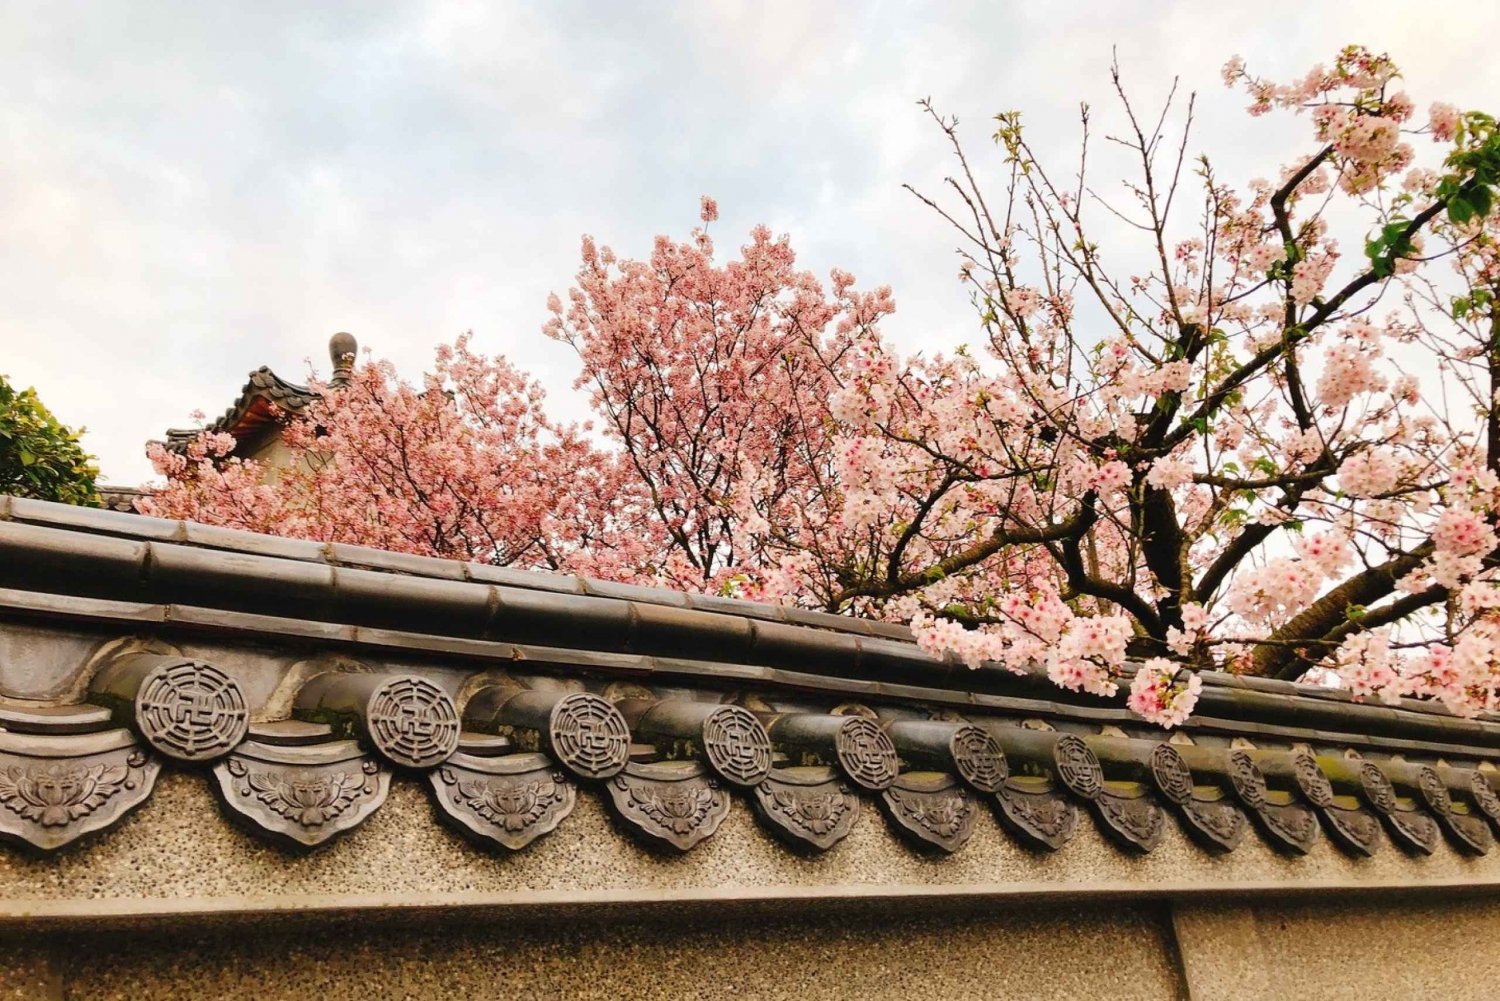 Taipei: Guided Cherry Blossom Day Tour